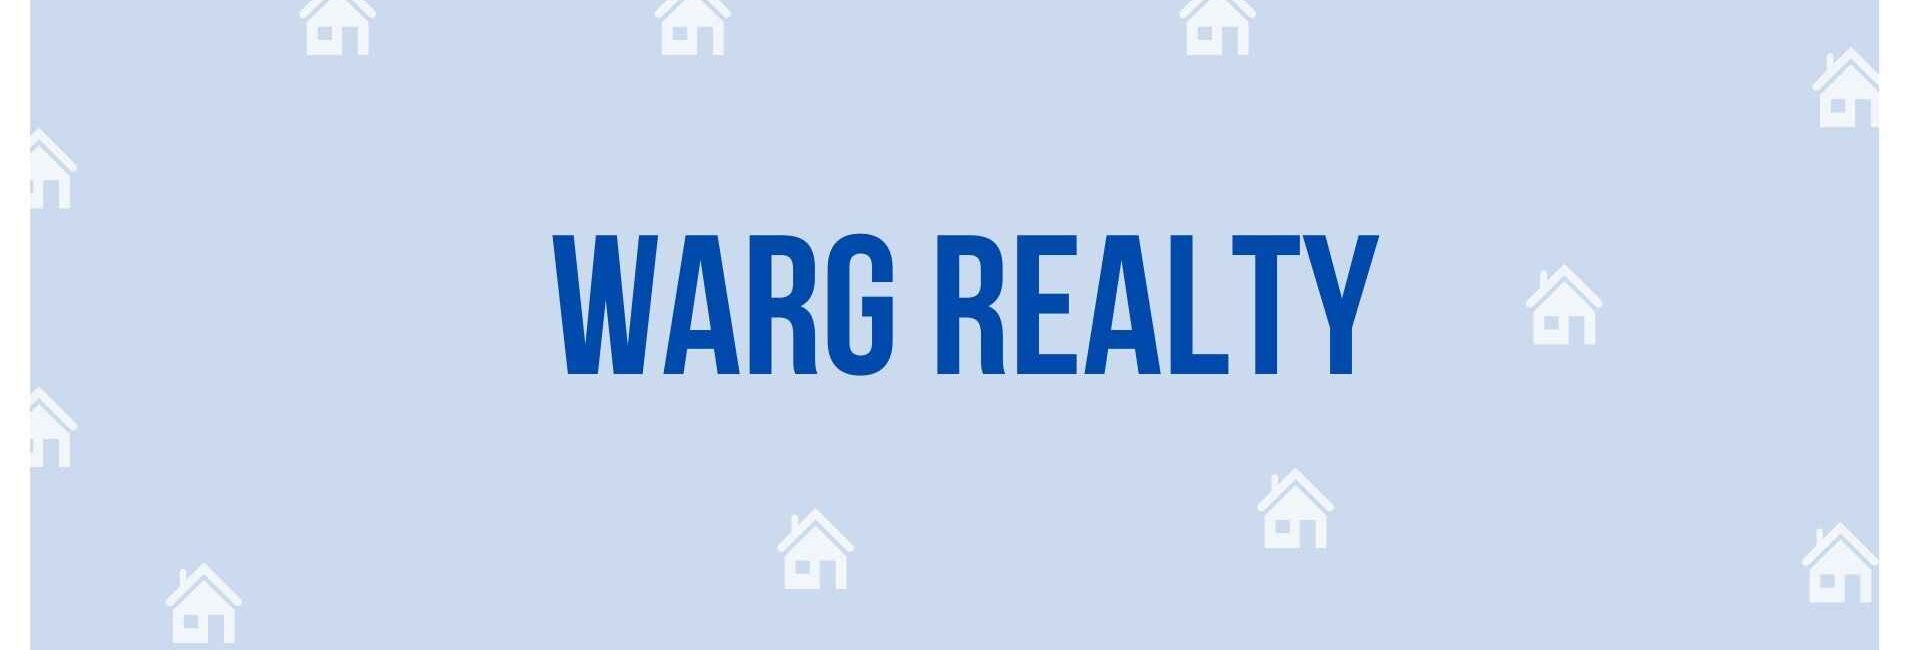 Warg Realty - Property Dealer in Noida